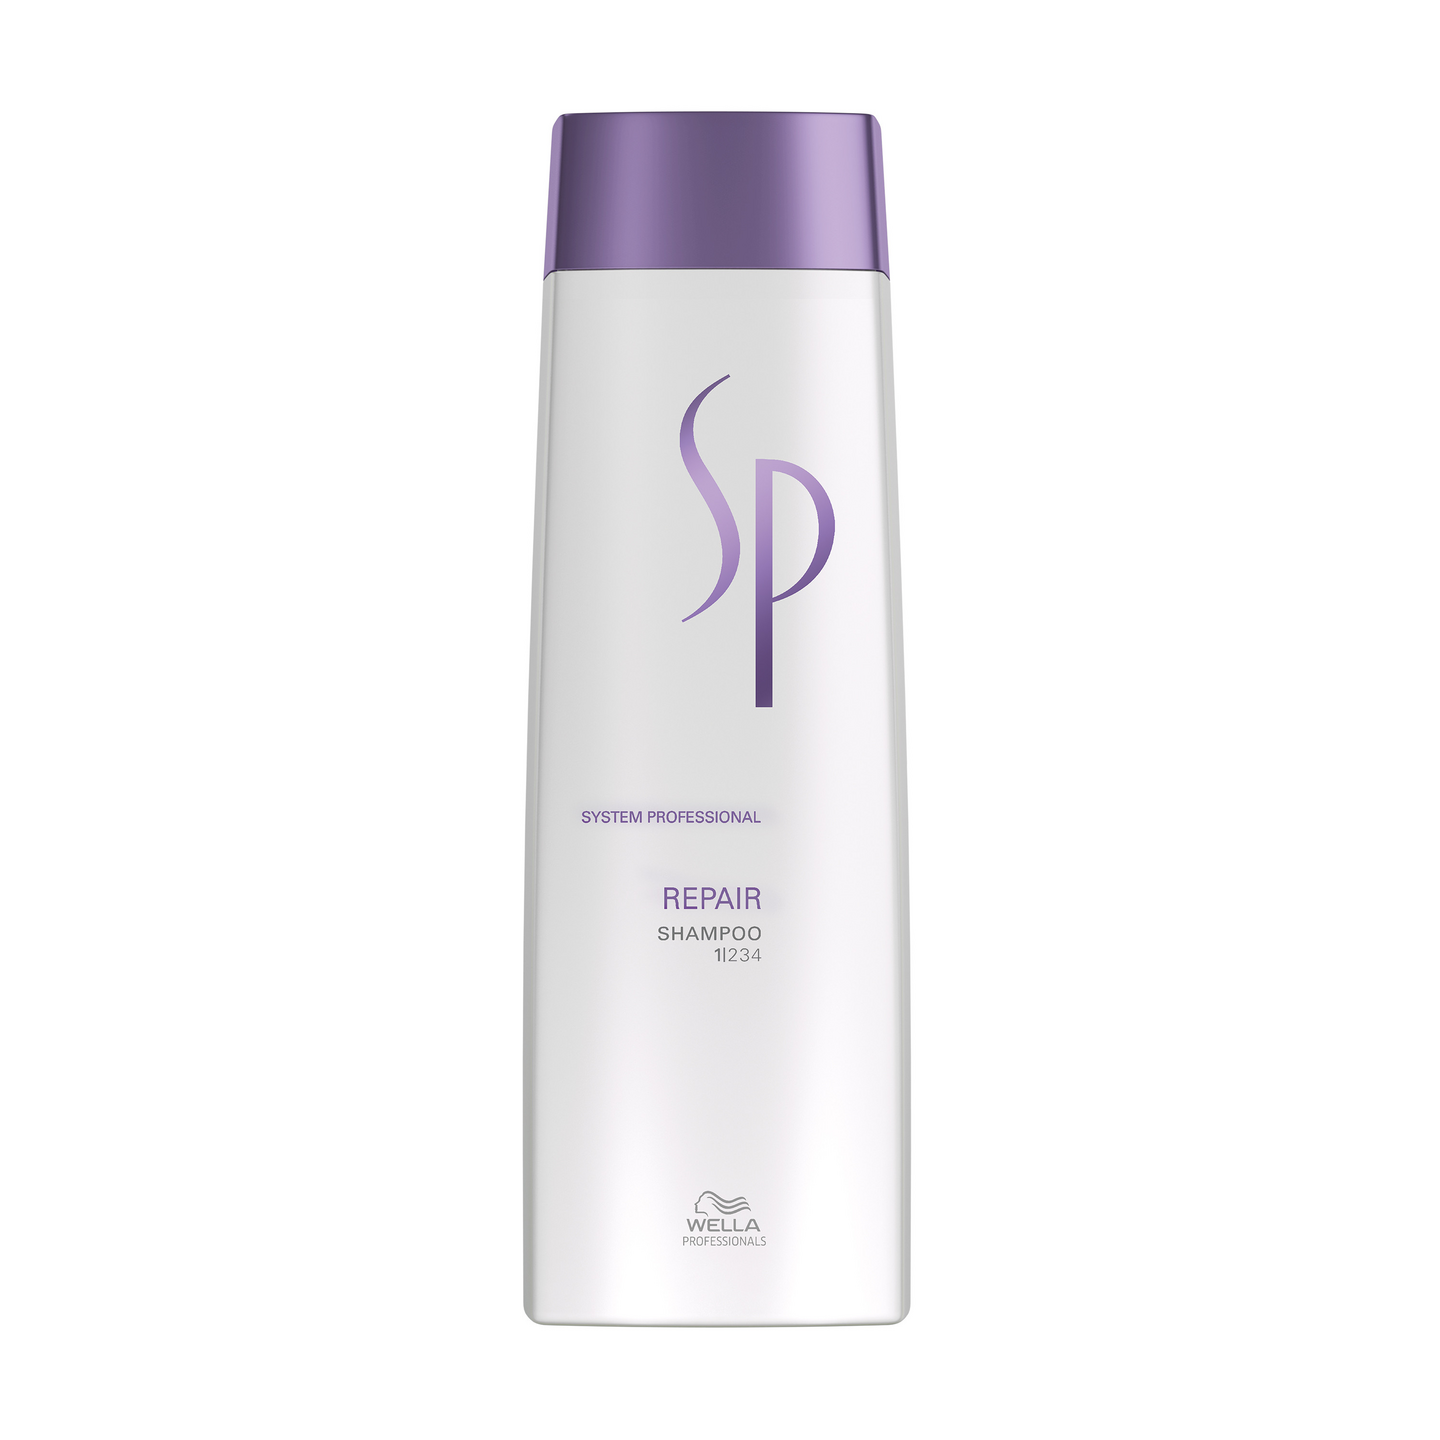 Wella Professional SP shampoo 250ml Repair